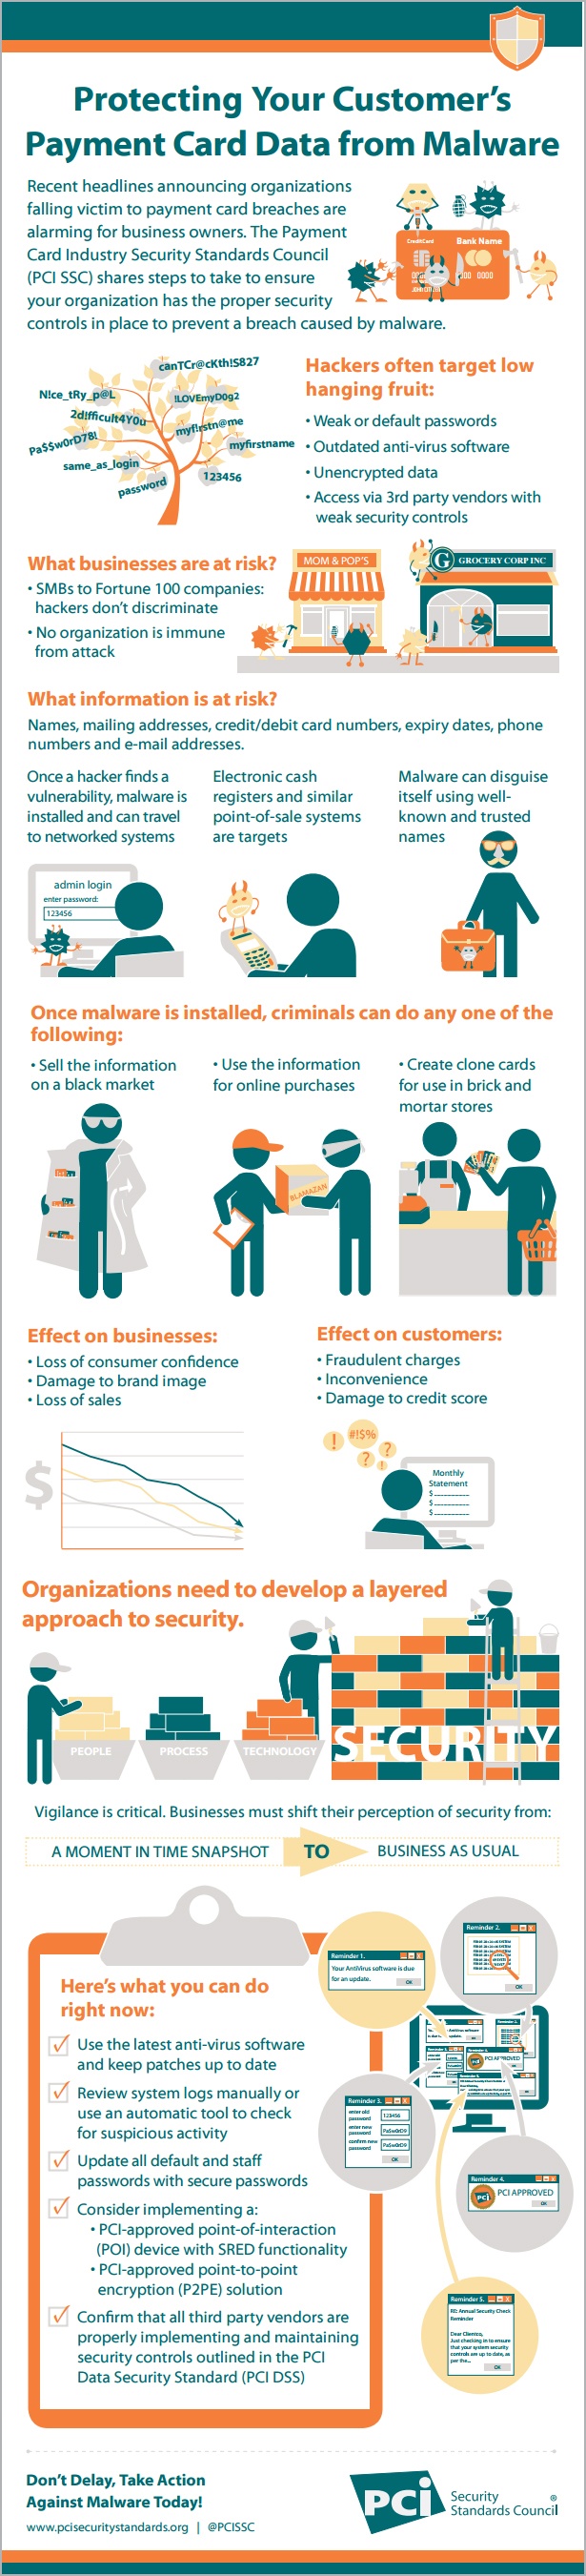 malware-infographic3.jpg